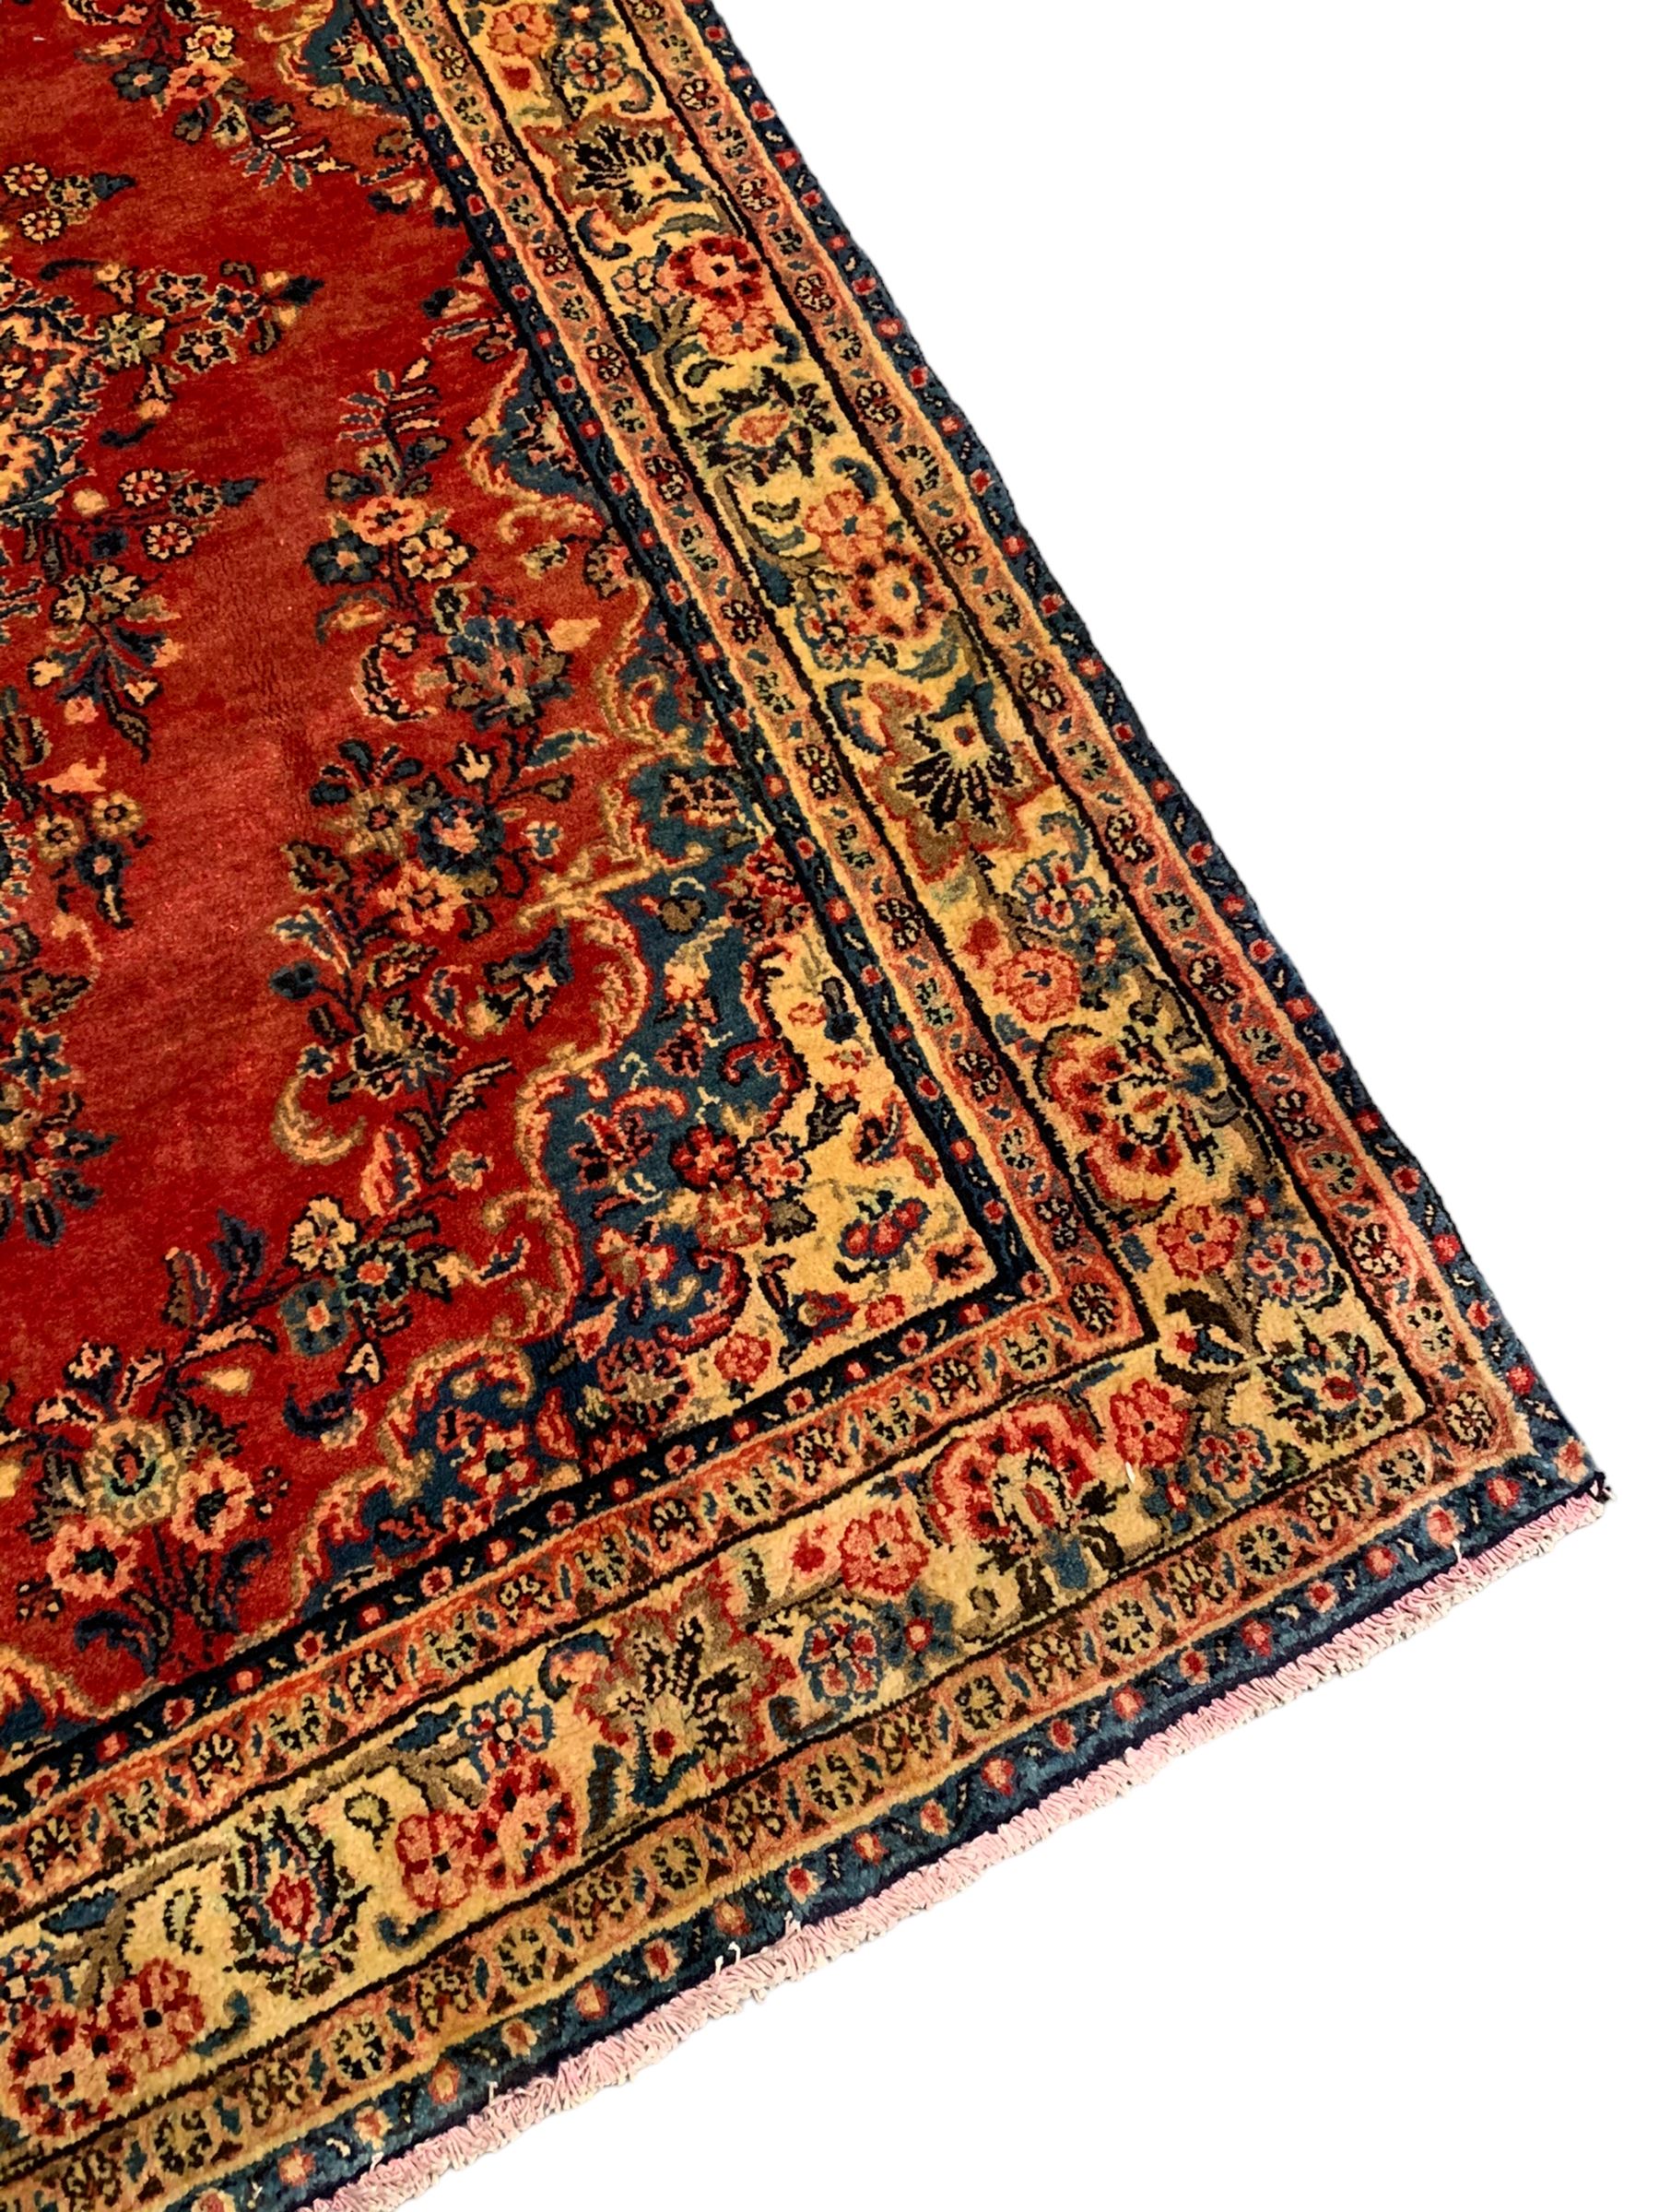 Persian crimson ground rug - Image 8 of 8